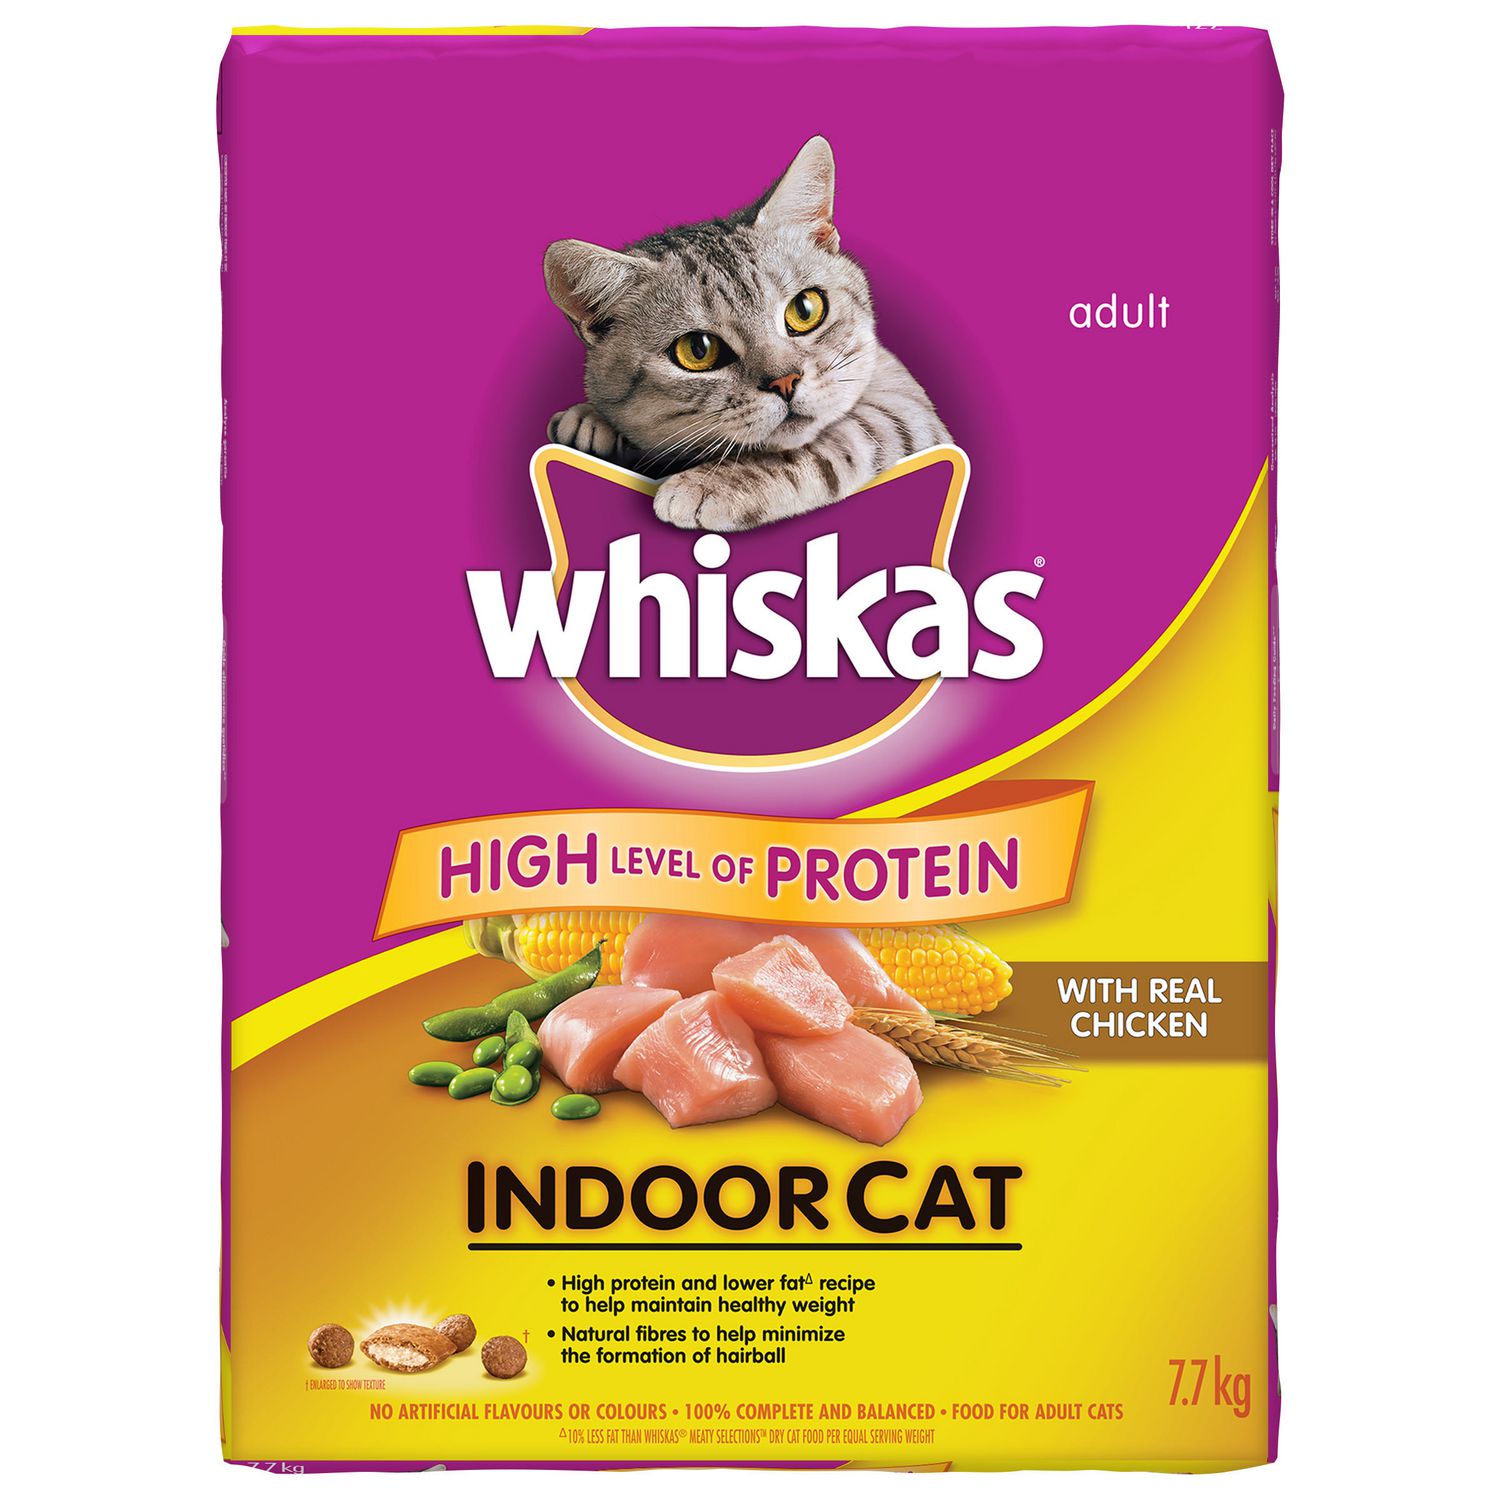 Whiskas Dry CAT Food for Indoor Cats Walmart Canada